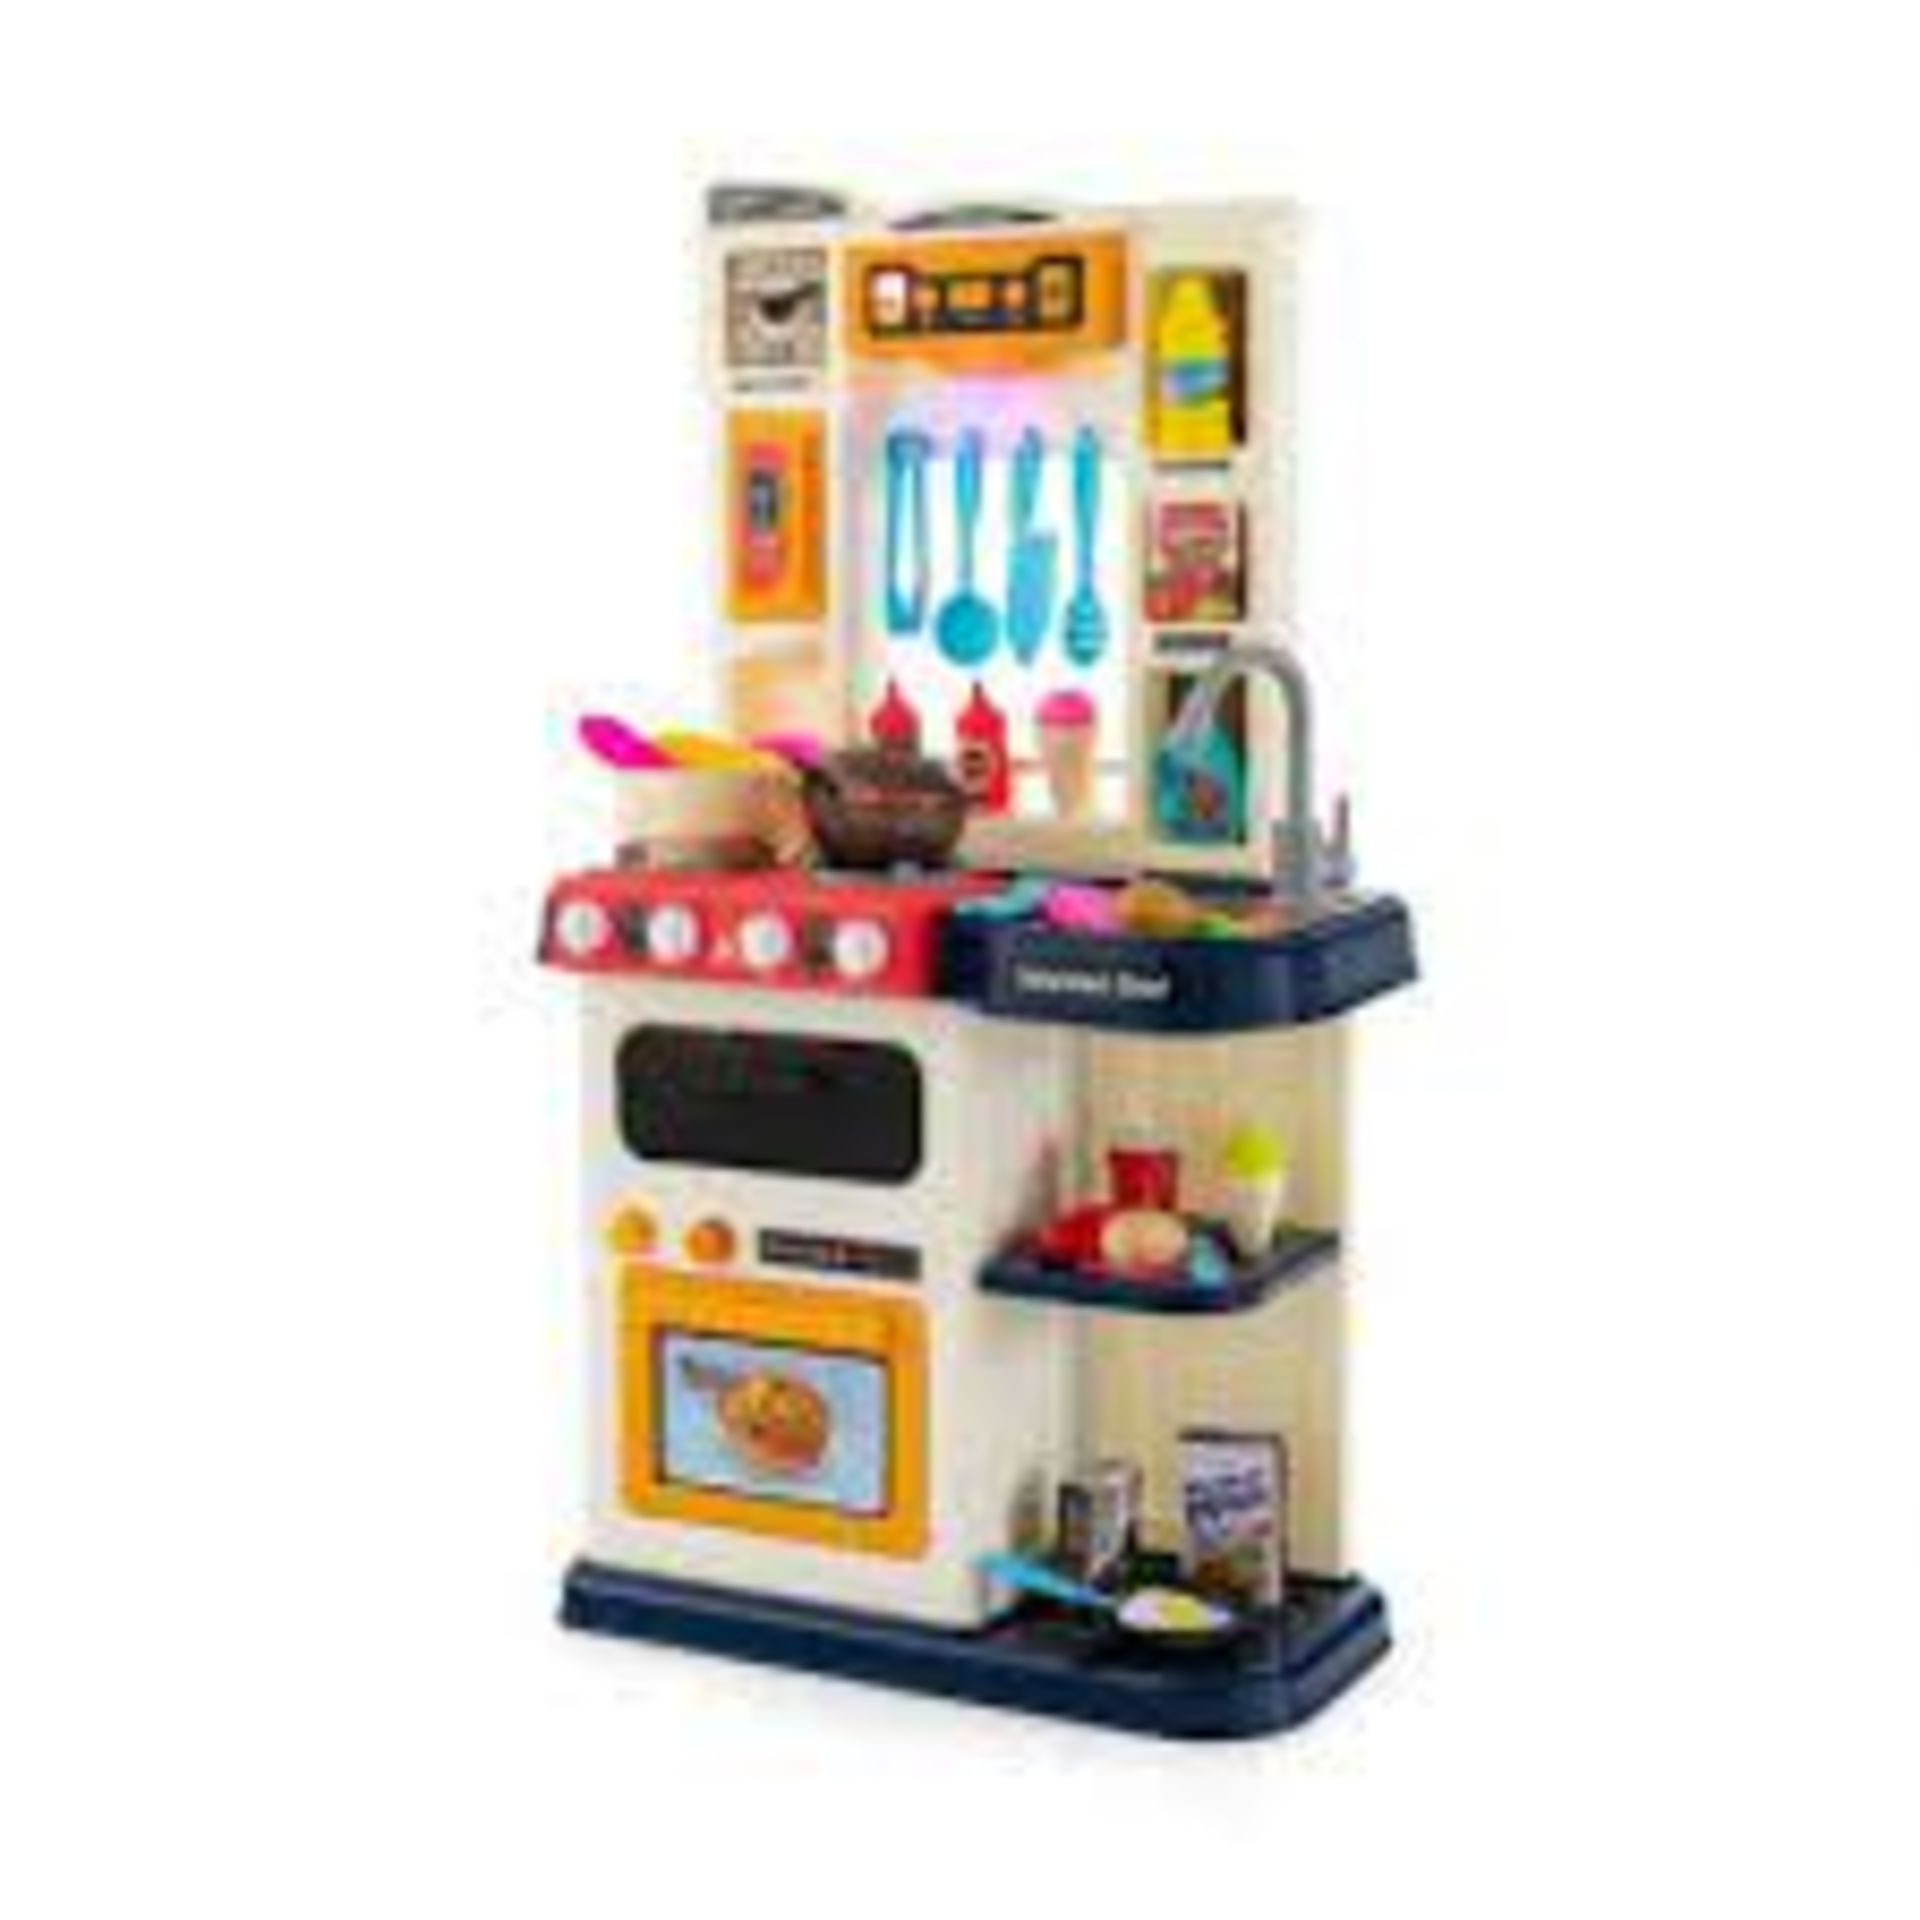 Kids Kitchen Playset with 65 Pieces Accessories - PW. This kitchen playset is loaded with real